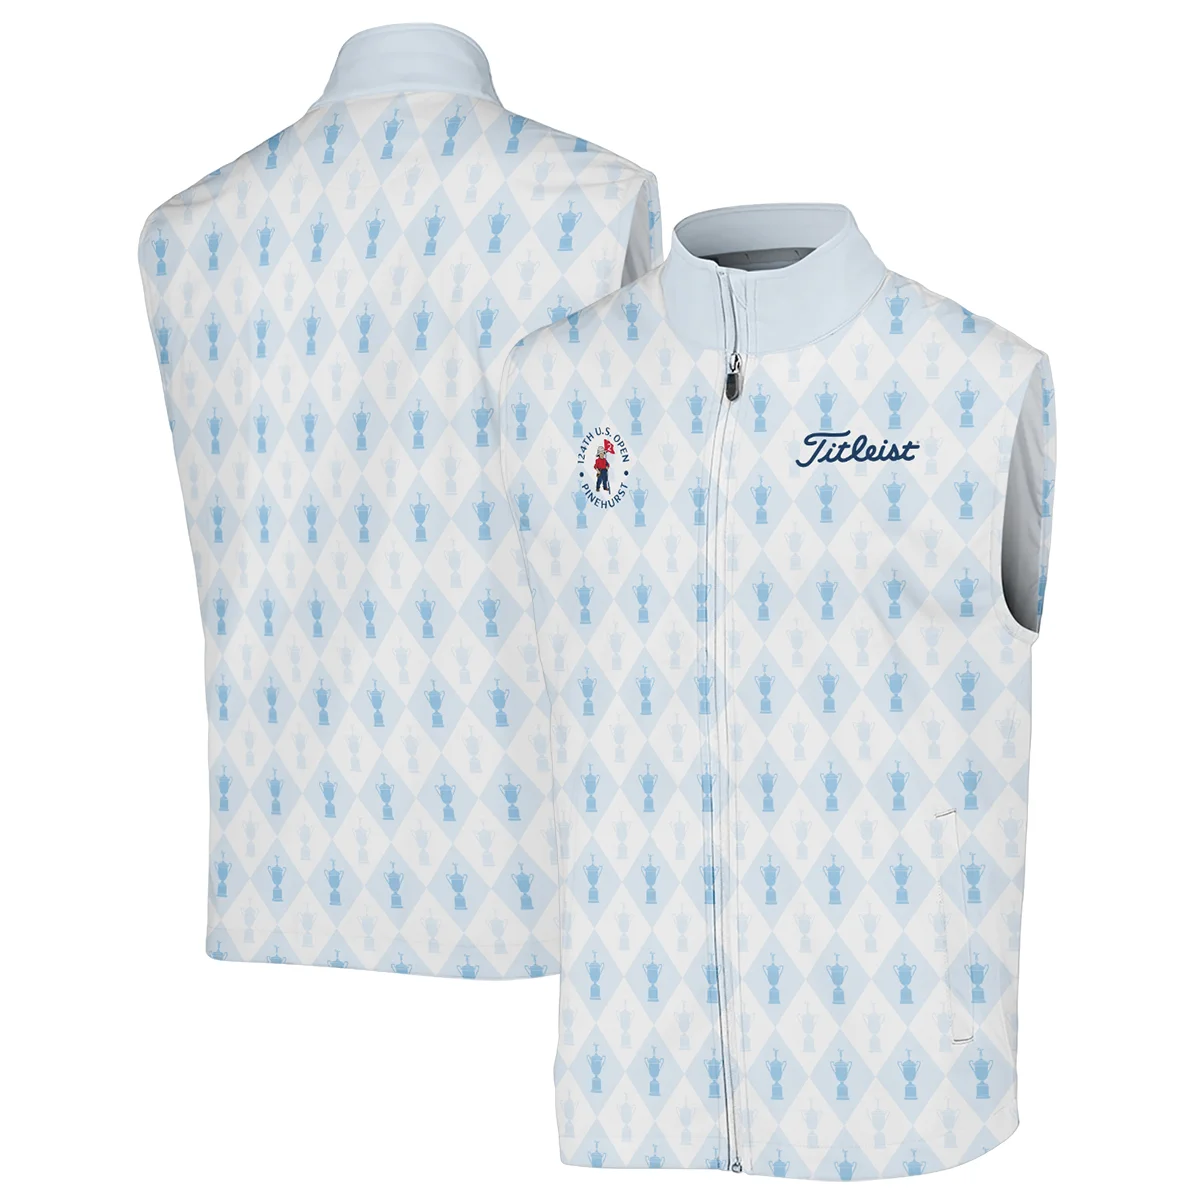 PGA Tour 124th U.S. Open Pinehurst Titleist Sleeveless Jacket Sports Pattern Cup Color Light Blue Sleeveless Jacket